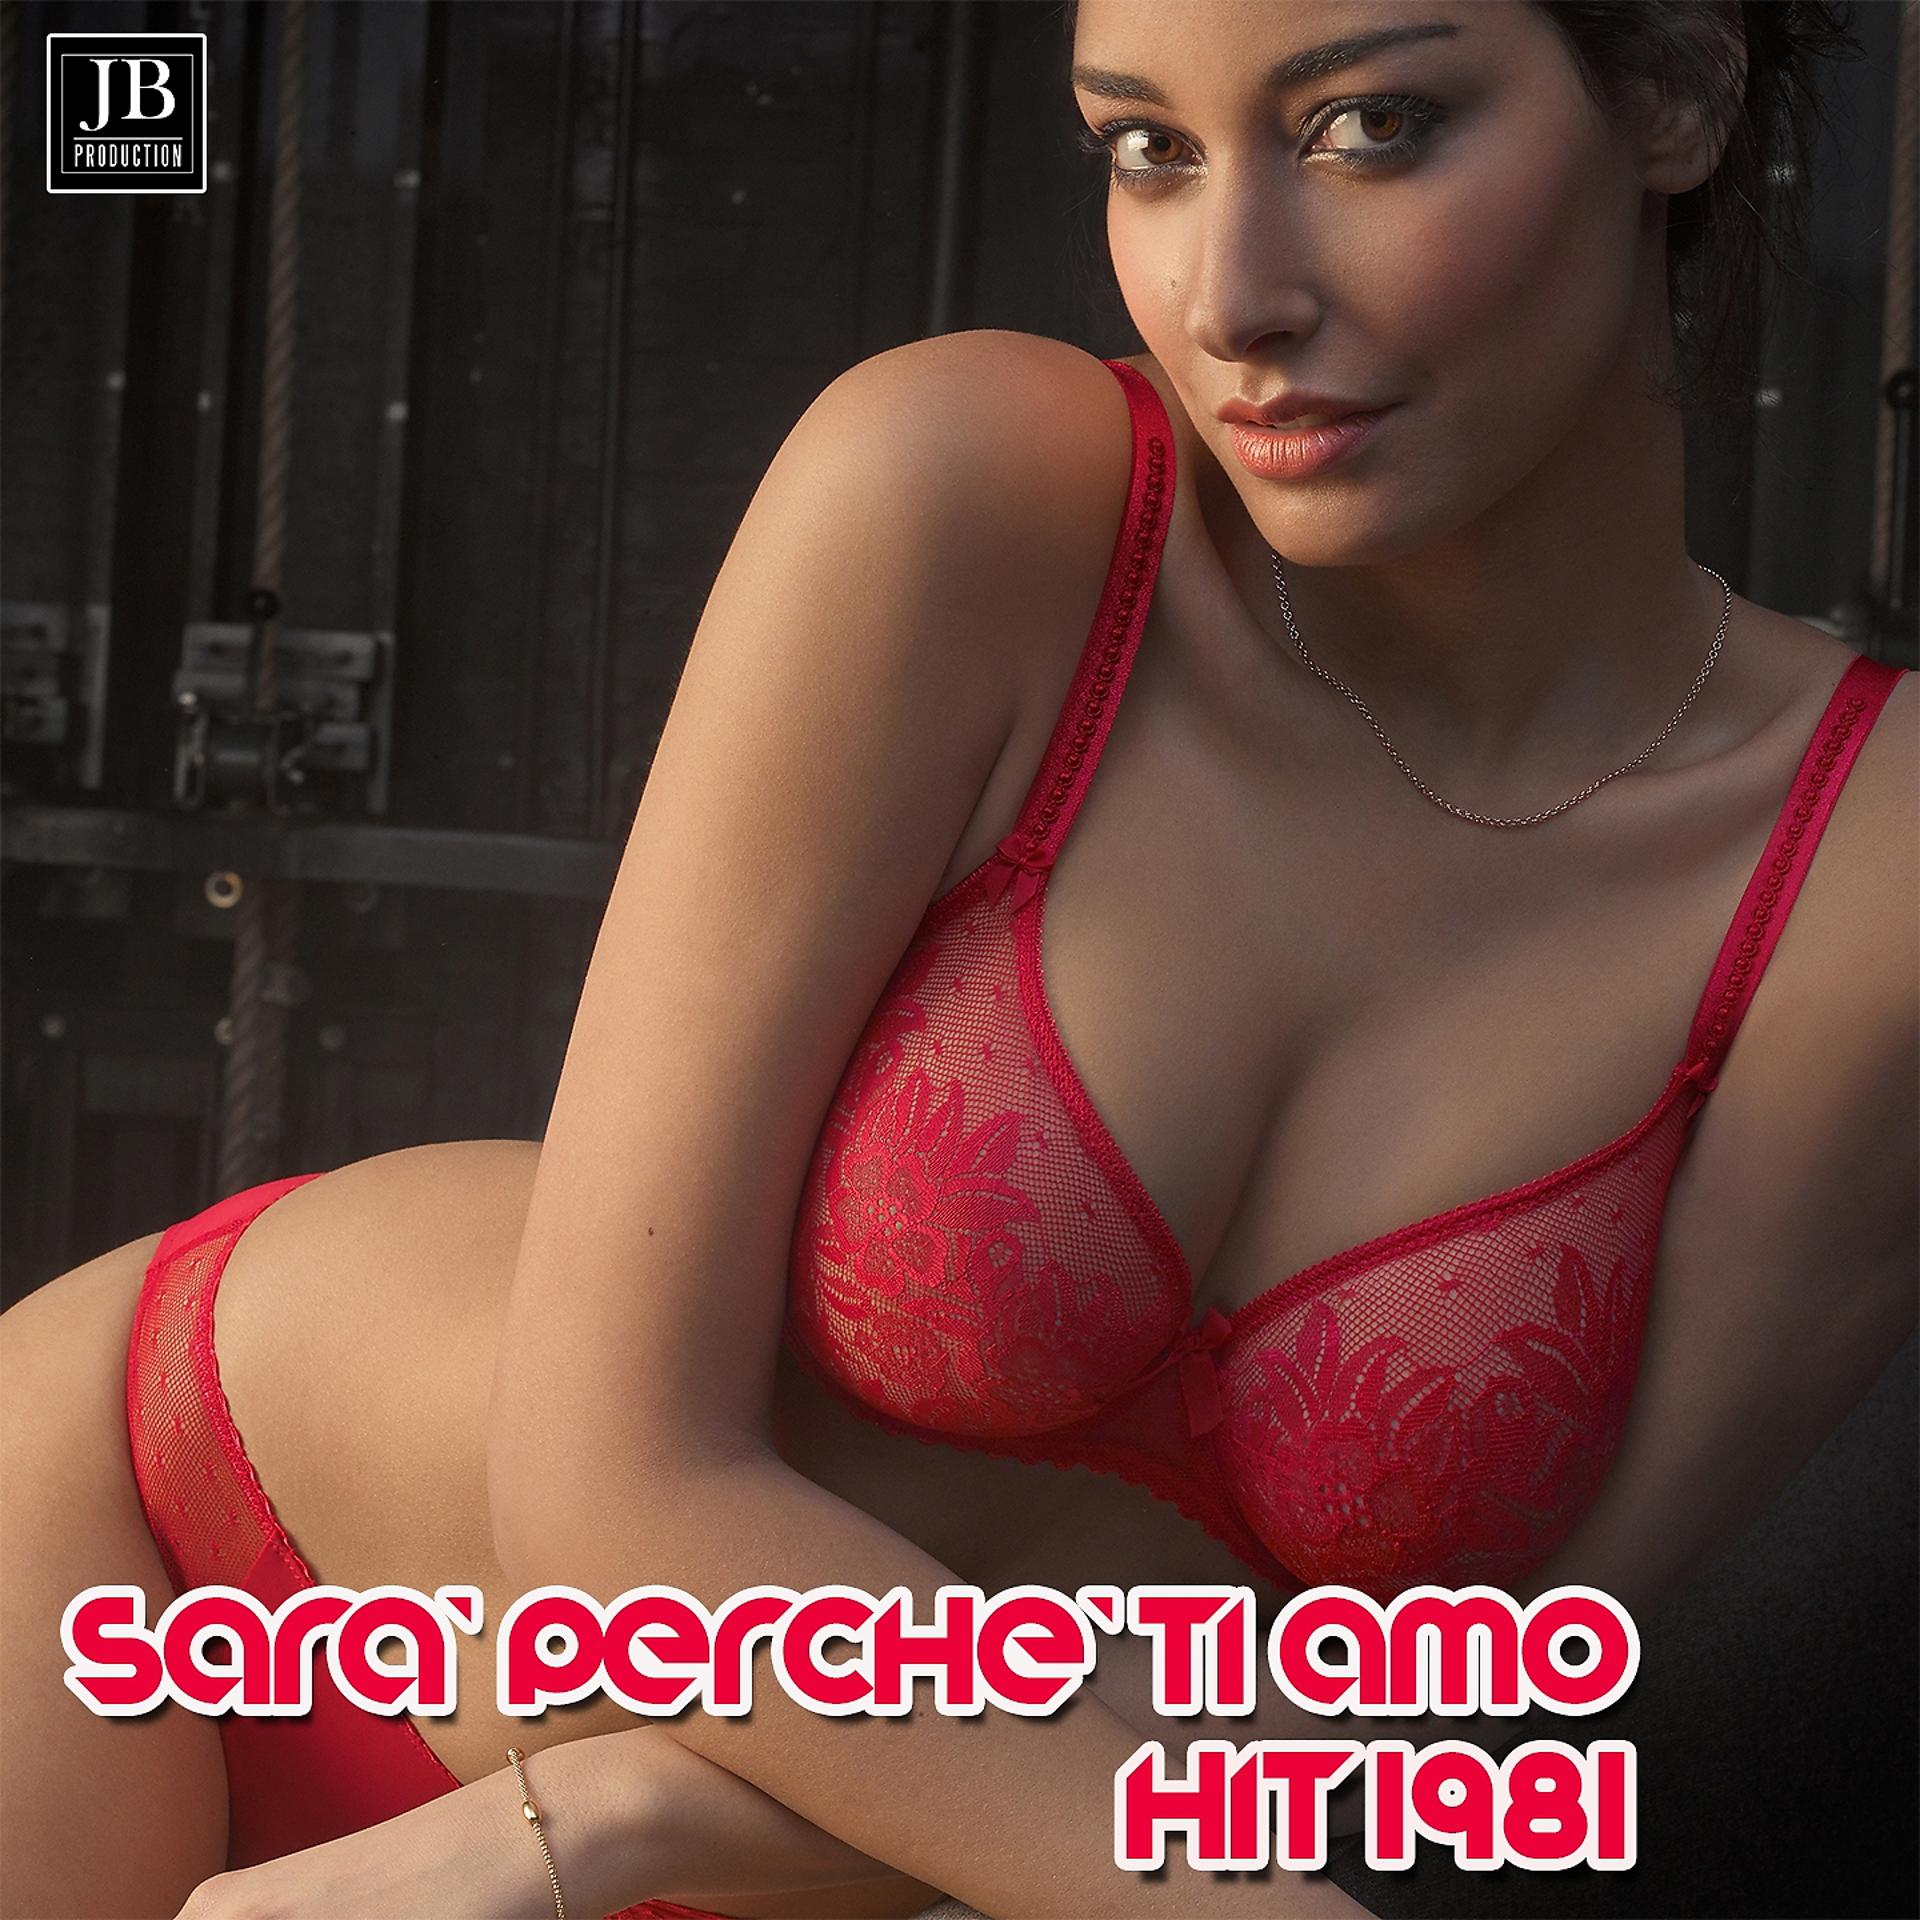 Постер альбома Sarà perché ti amo (Milan inno 2013)